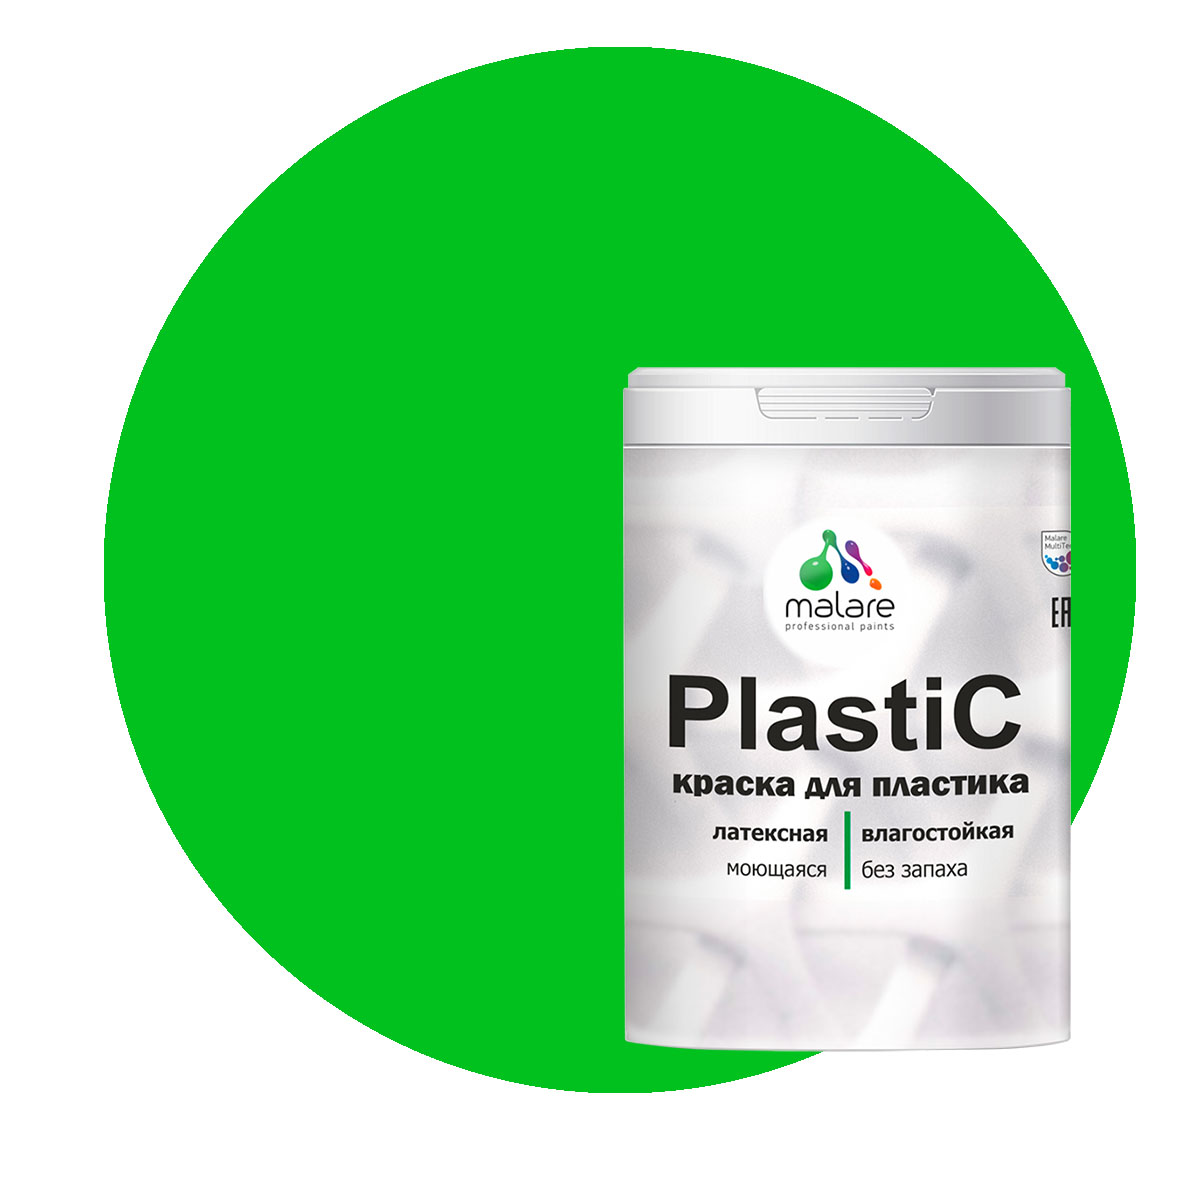 Краска Malare PlastiC для пластика, ПВХ, для сайдинга, освежающий зеленый 1 кг.